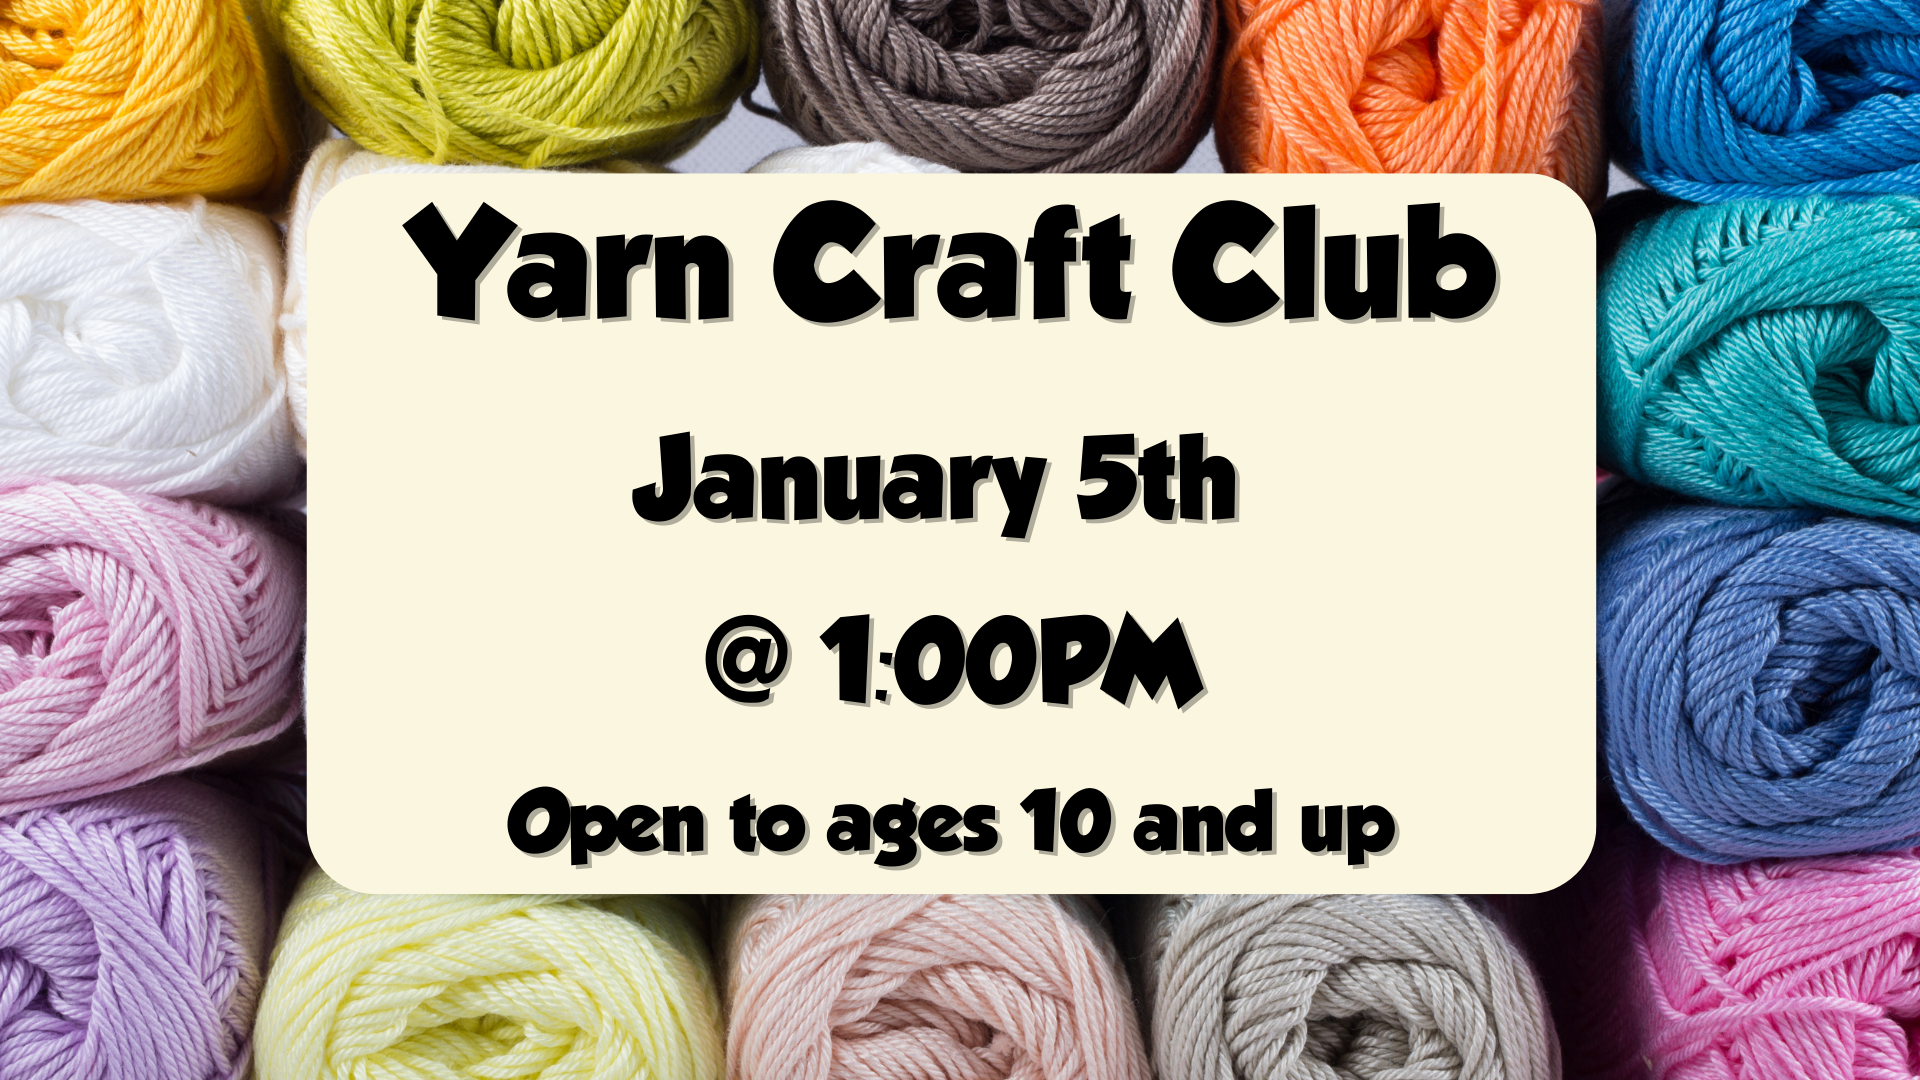 Yarn Craft Club, January 5th at 1pm